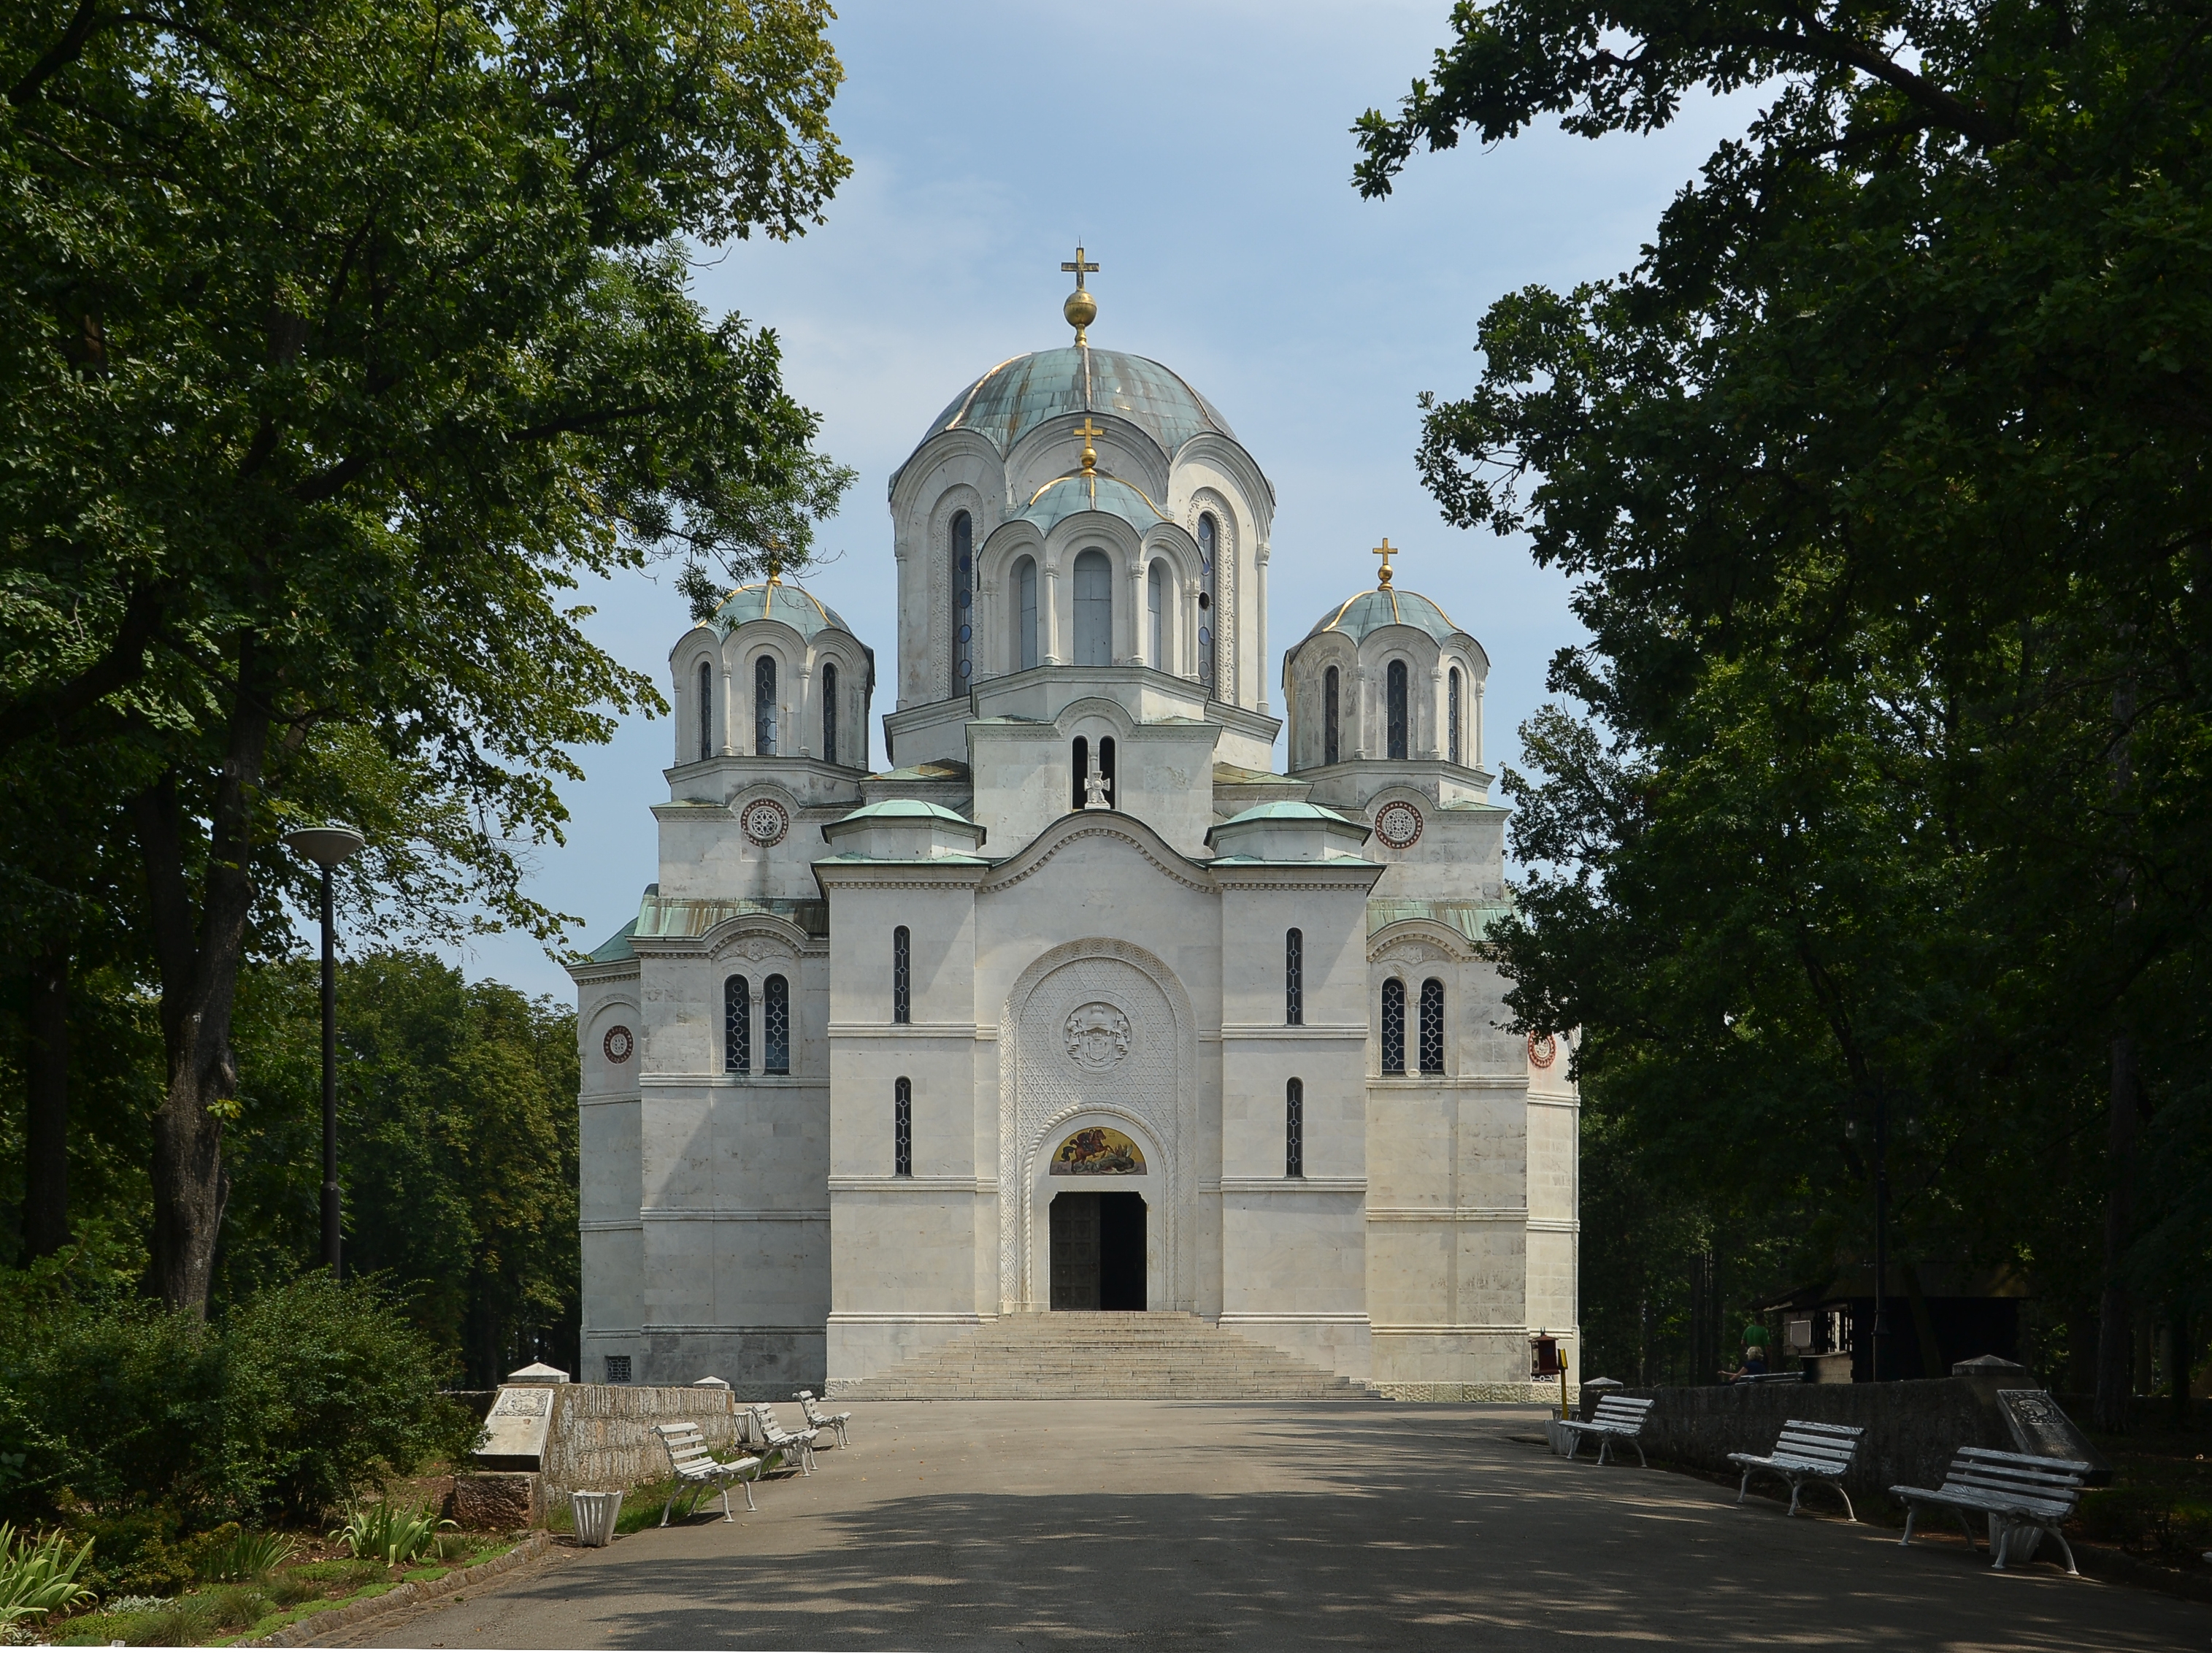 Church of St. George in Topola (by Pudelek)